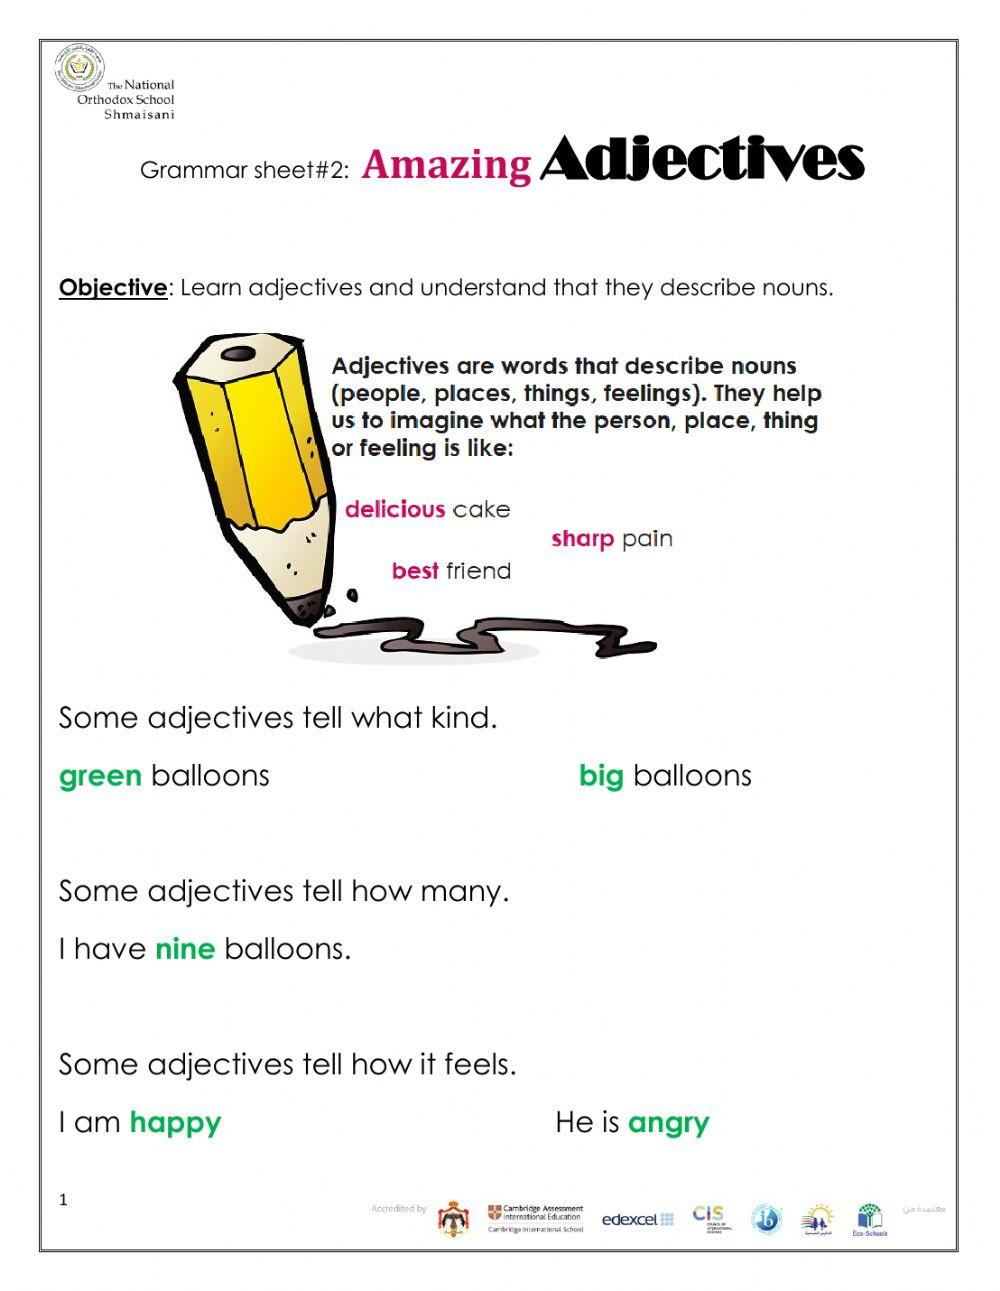 Amazing Adjectives